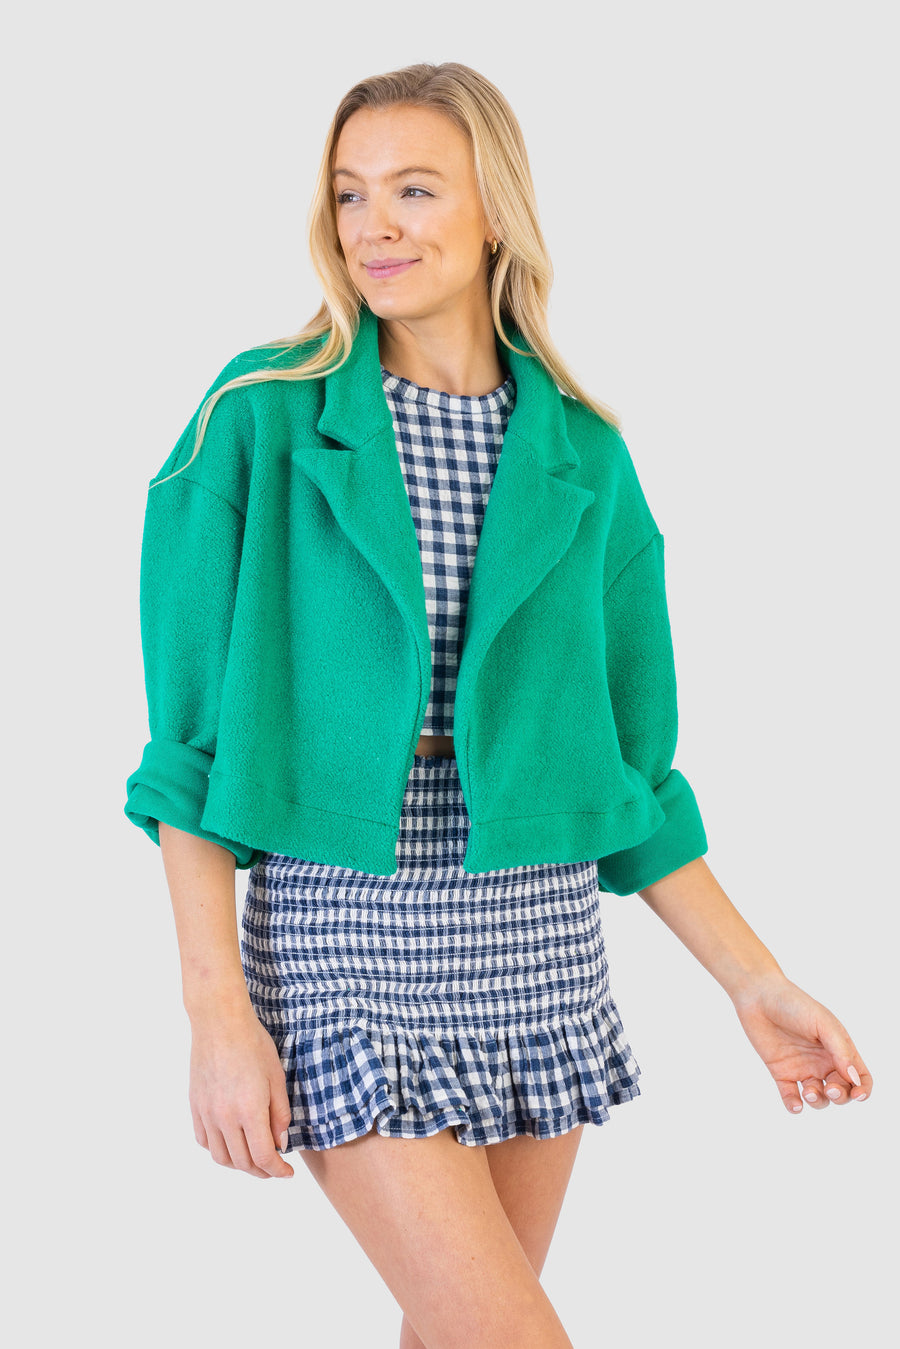 Celese Jacket Green Fleece